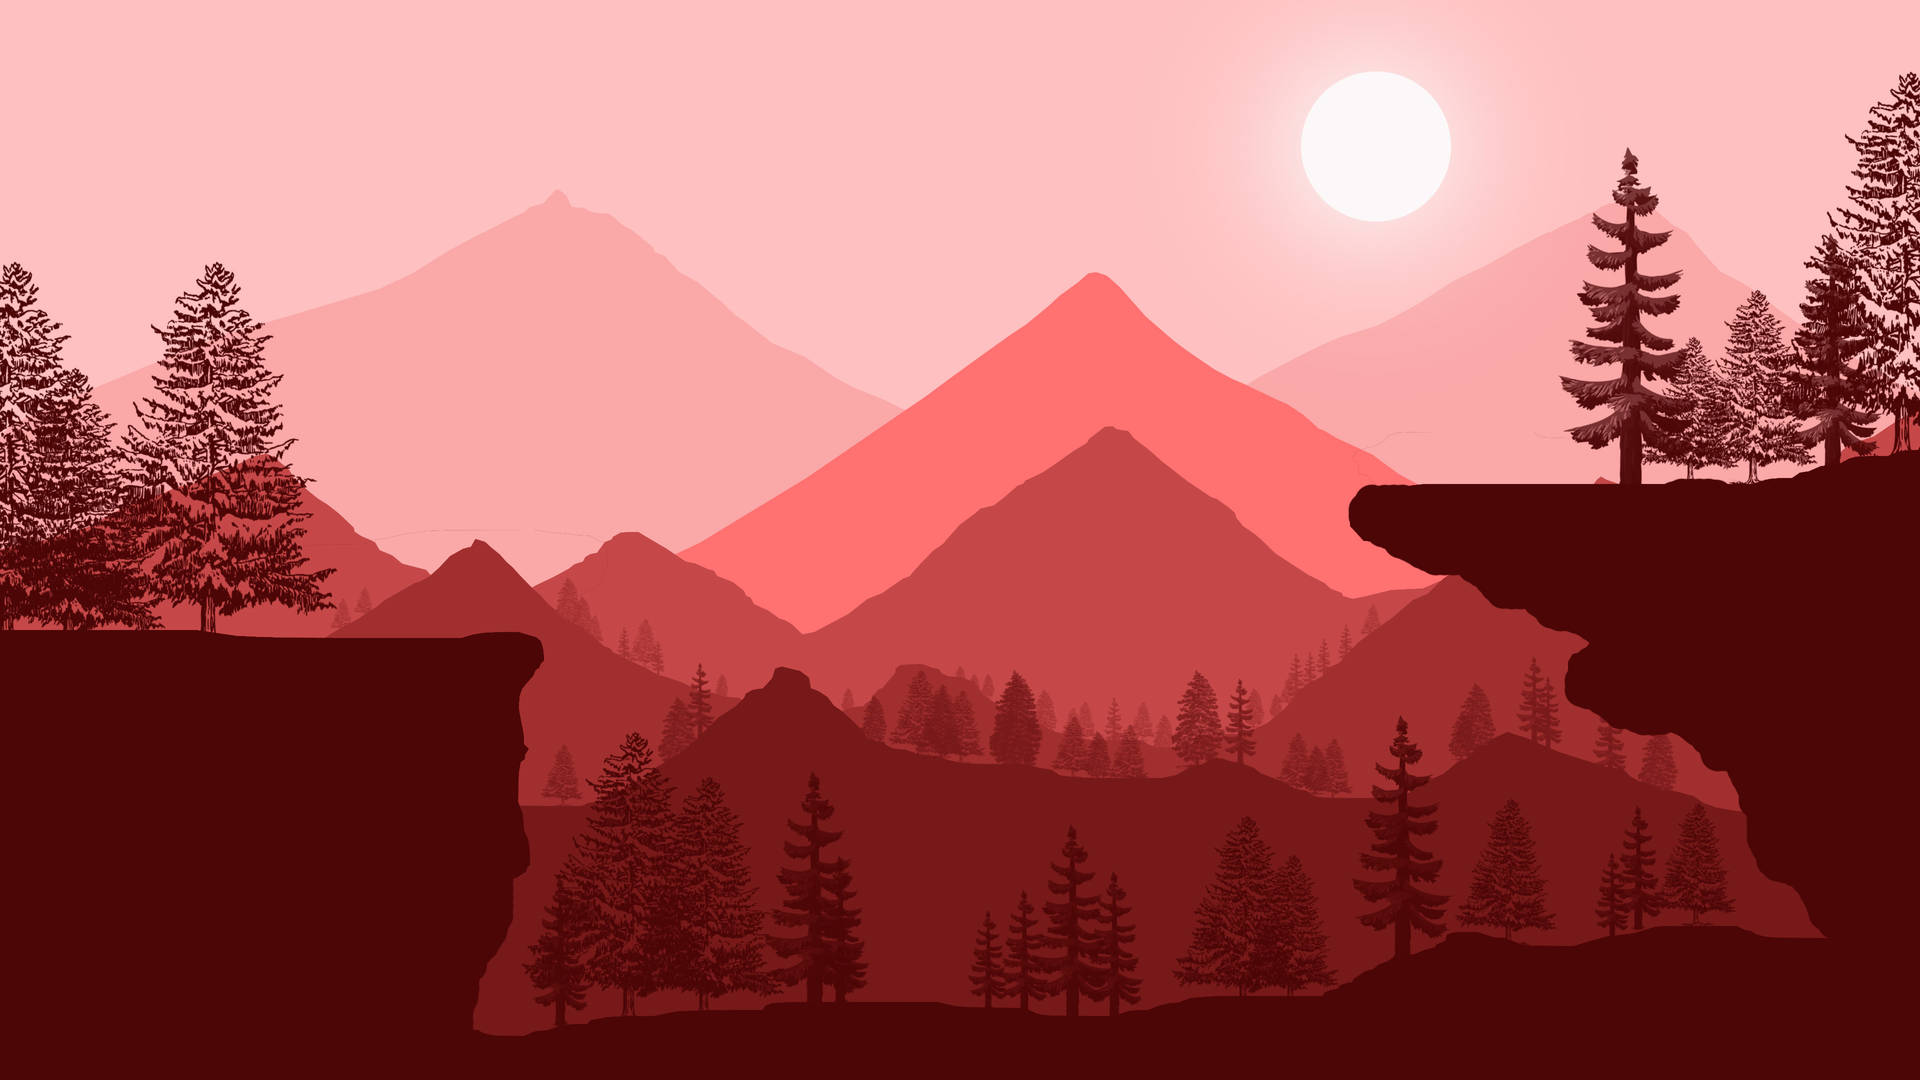 Red Mountain Digital Art Background